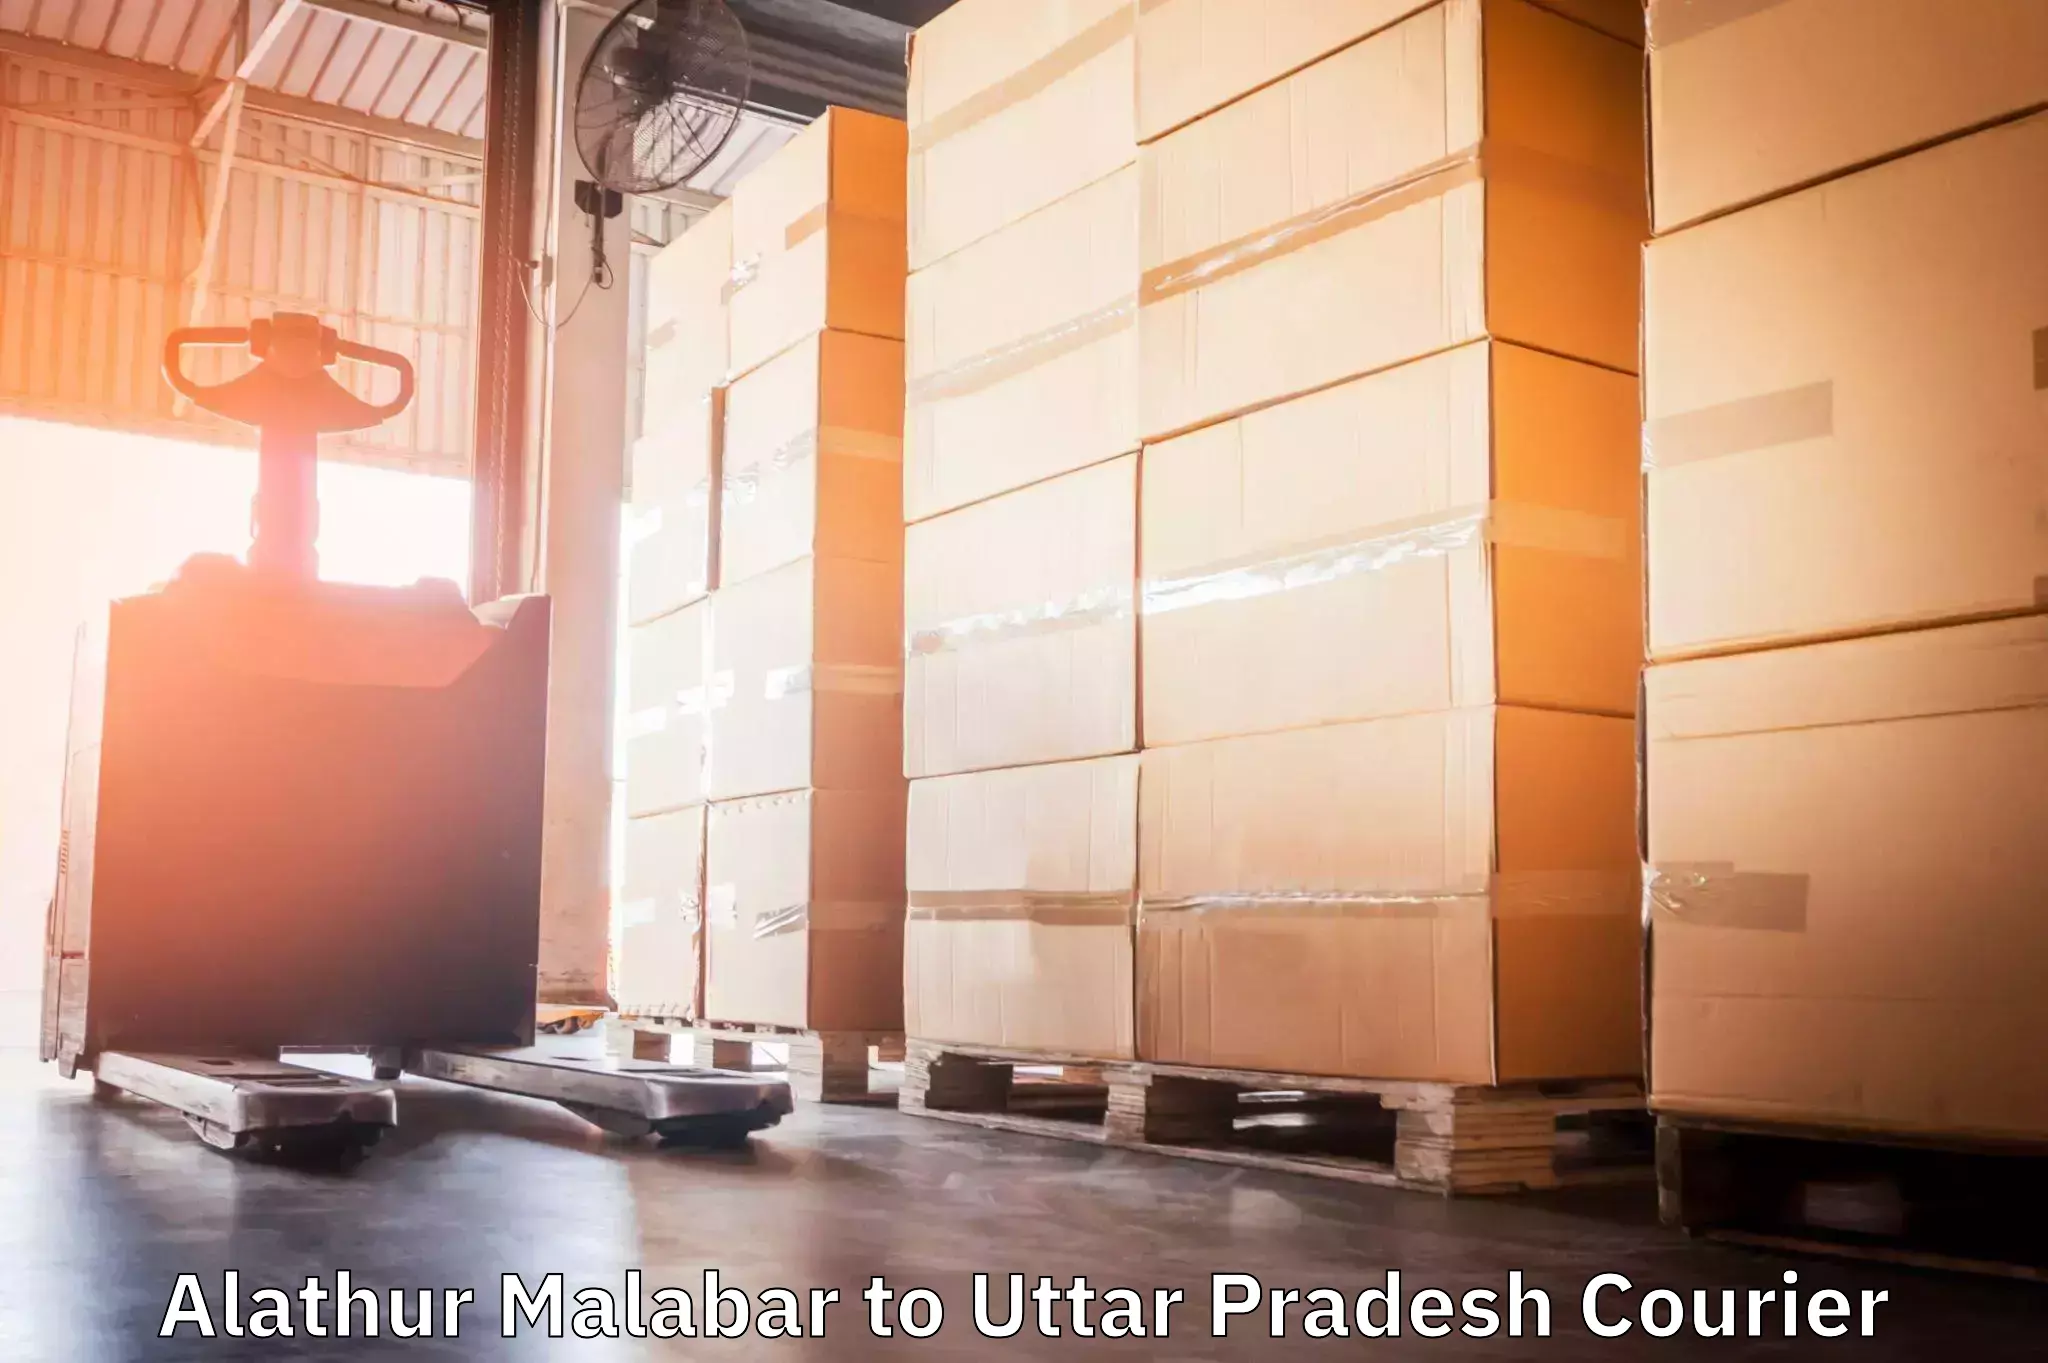 Reliable delivery network Alathur Malabar to Prayagraj